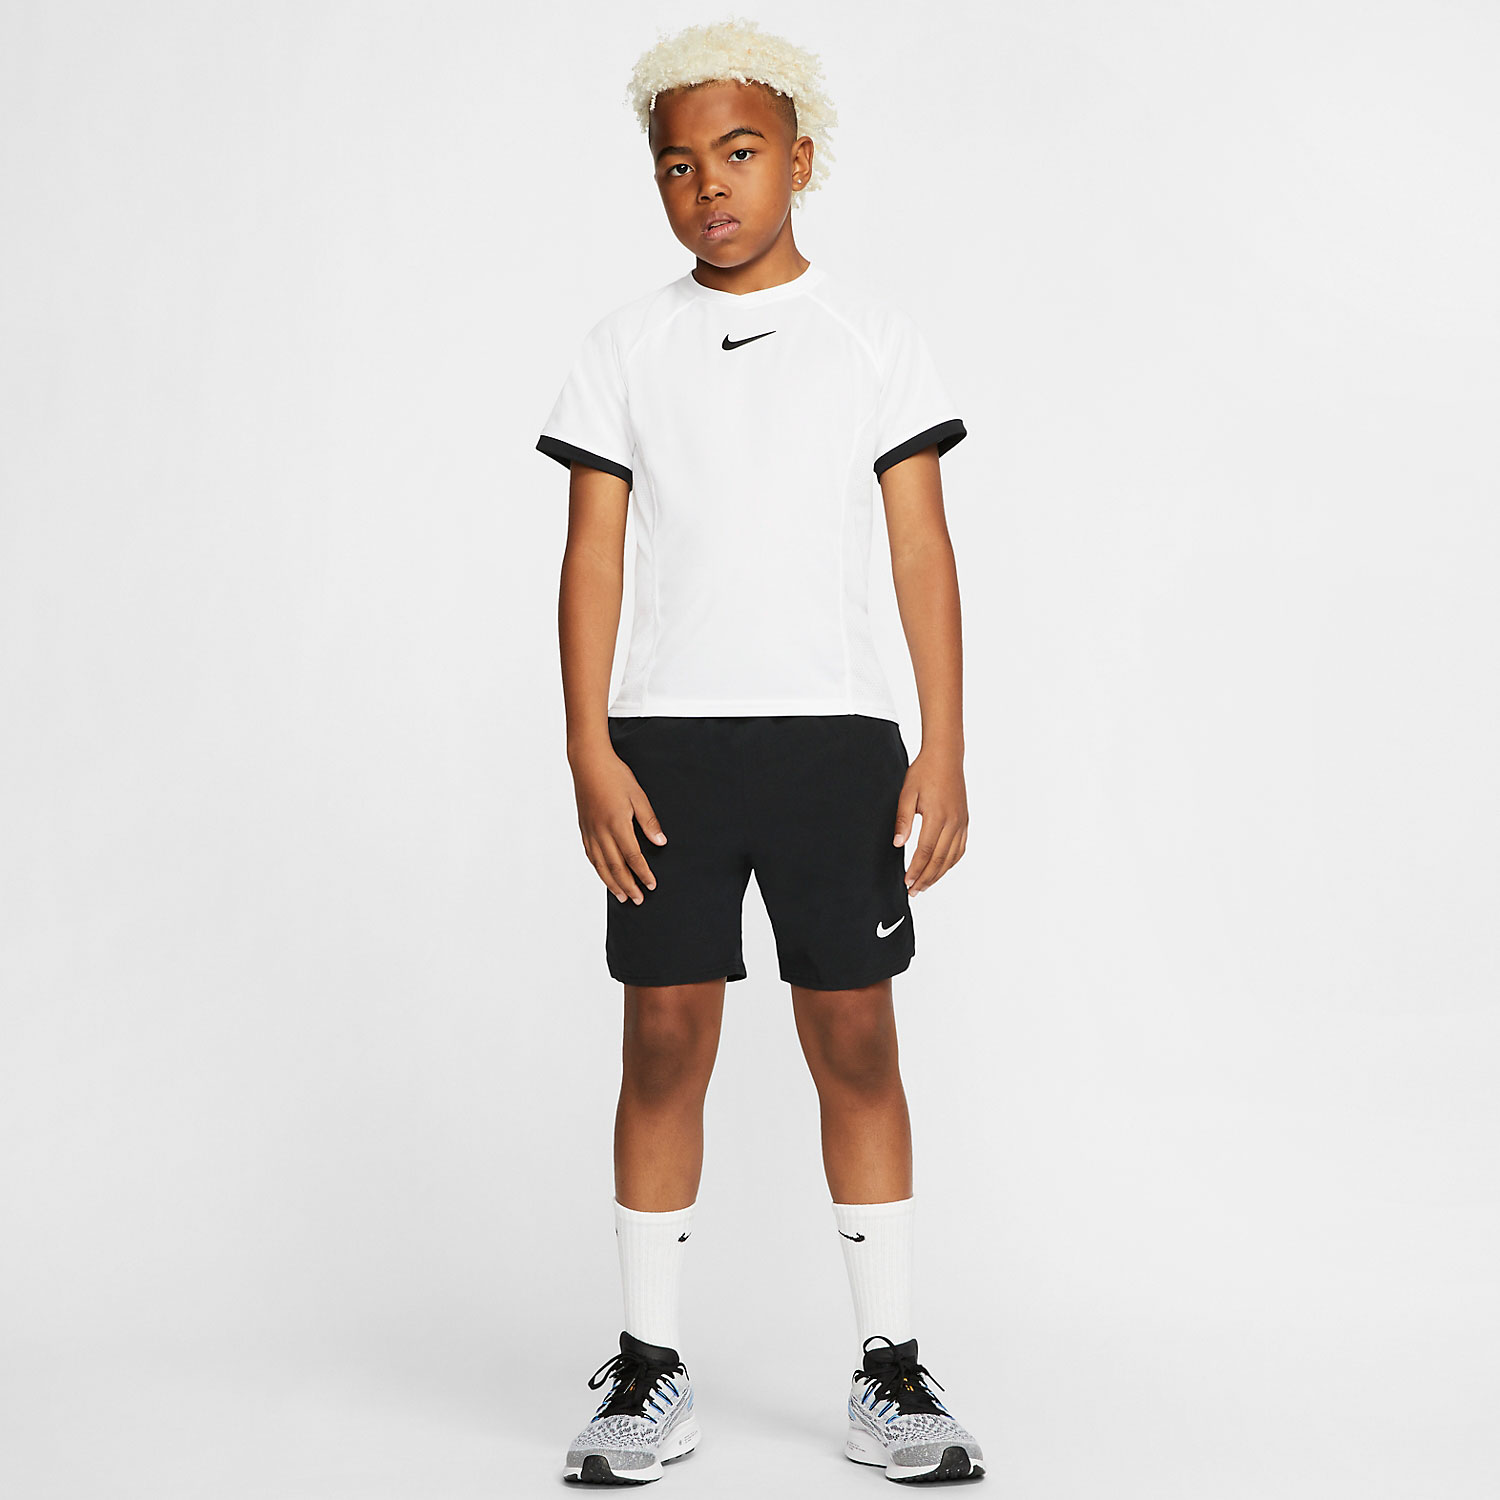 Nike Victory Flex Ace Boy's Tennis Shorts - Black/White